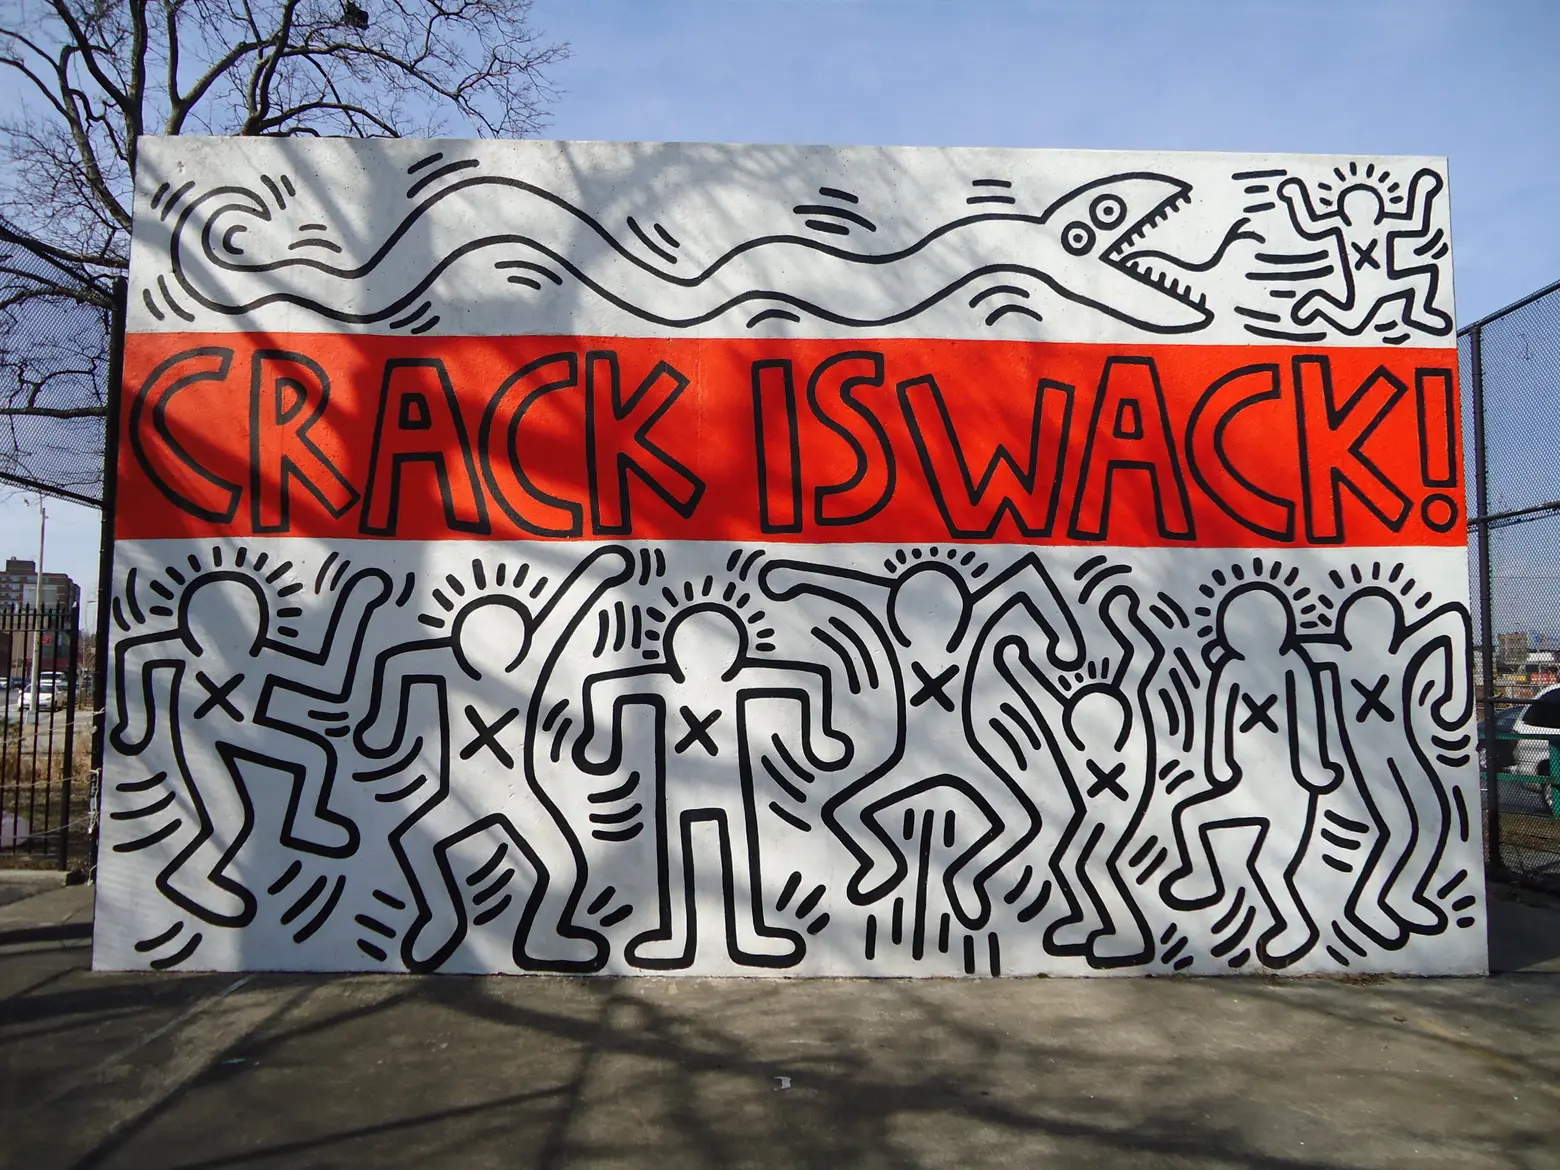 Keith Haring, Crack is Wack